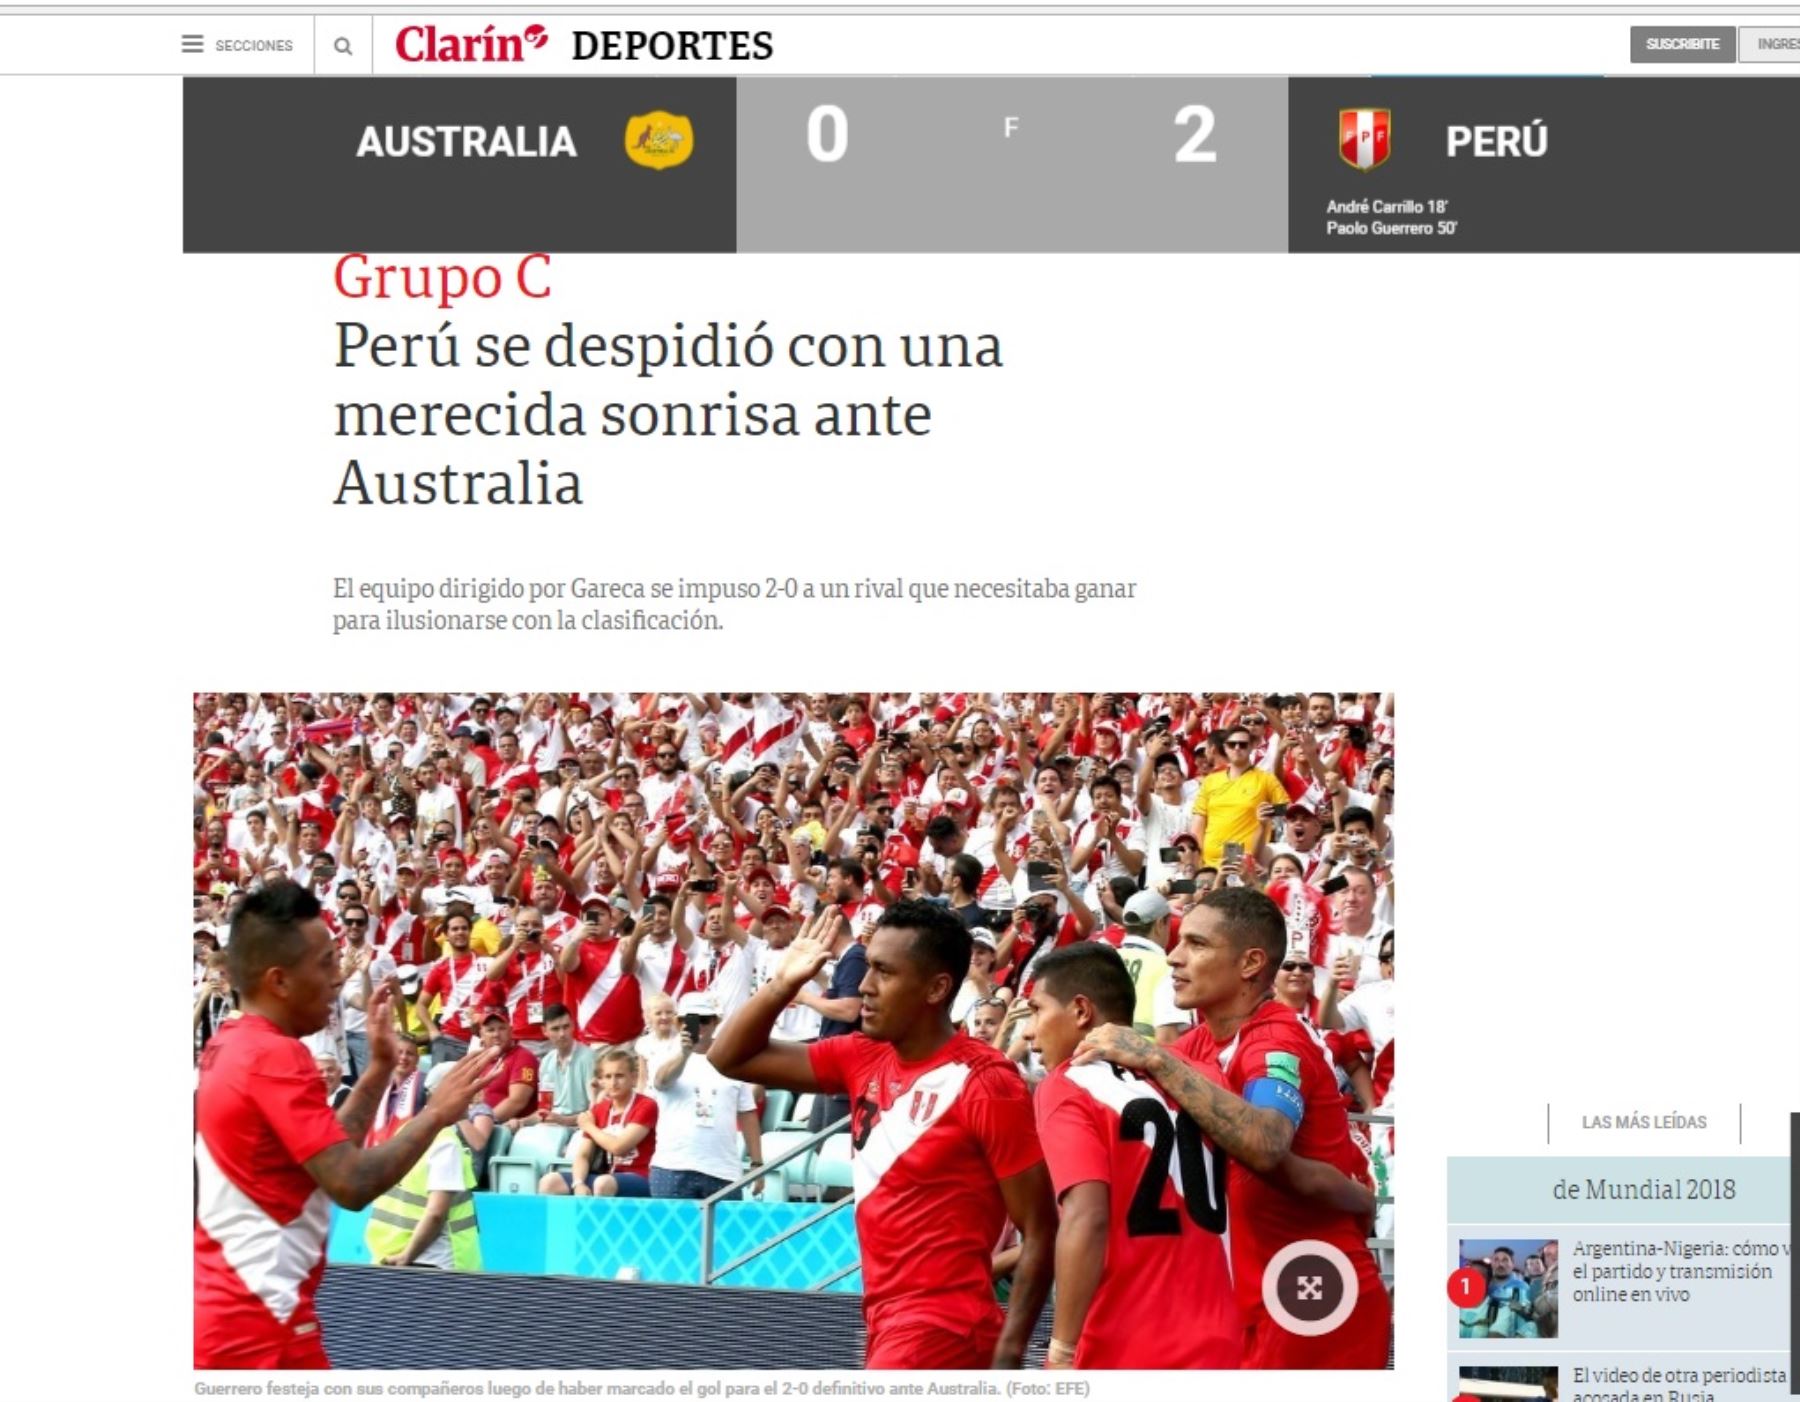 Prensa del mundo destaca triunfo del Perú en despedida del mundial Rusia 2018. Ganó 2 -0 a Australia.